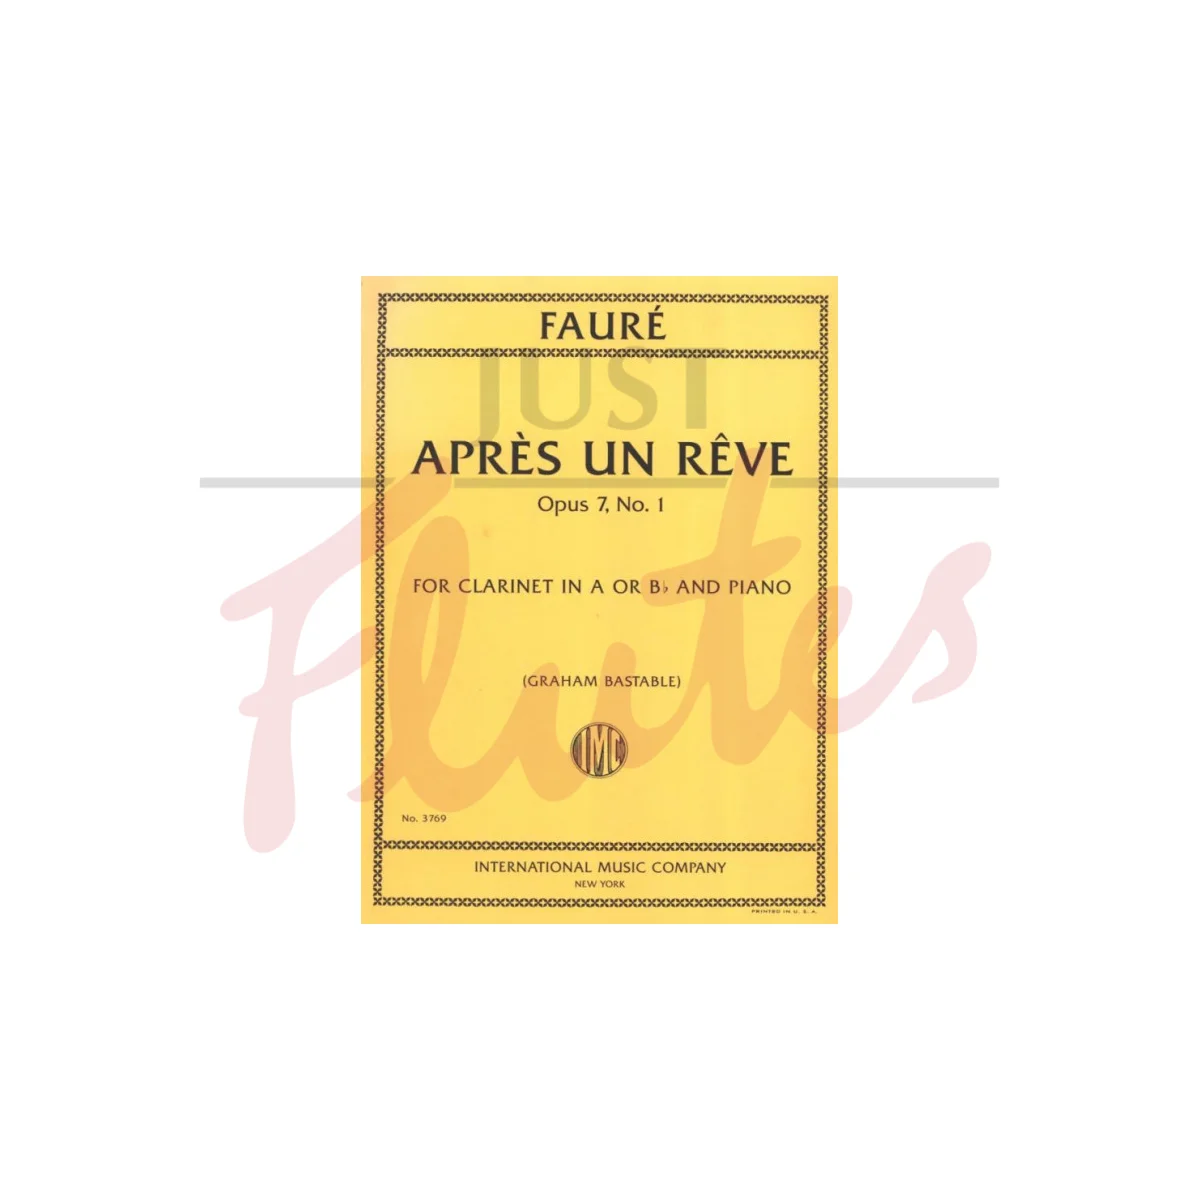 Apres un Reve for Clarinet and Piano